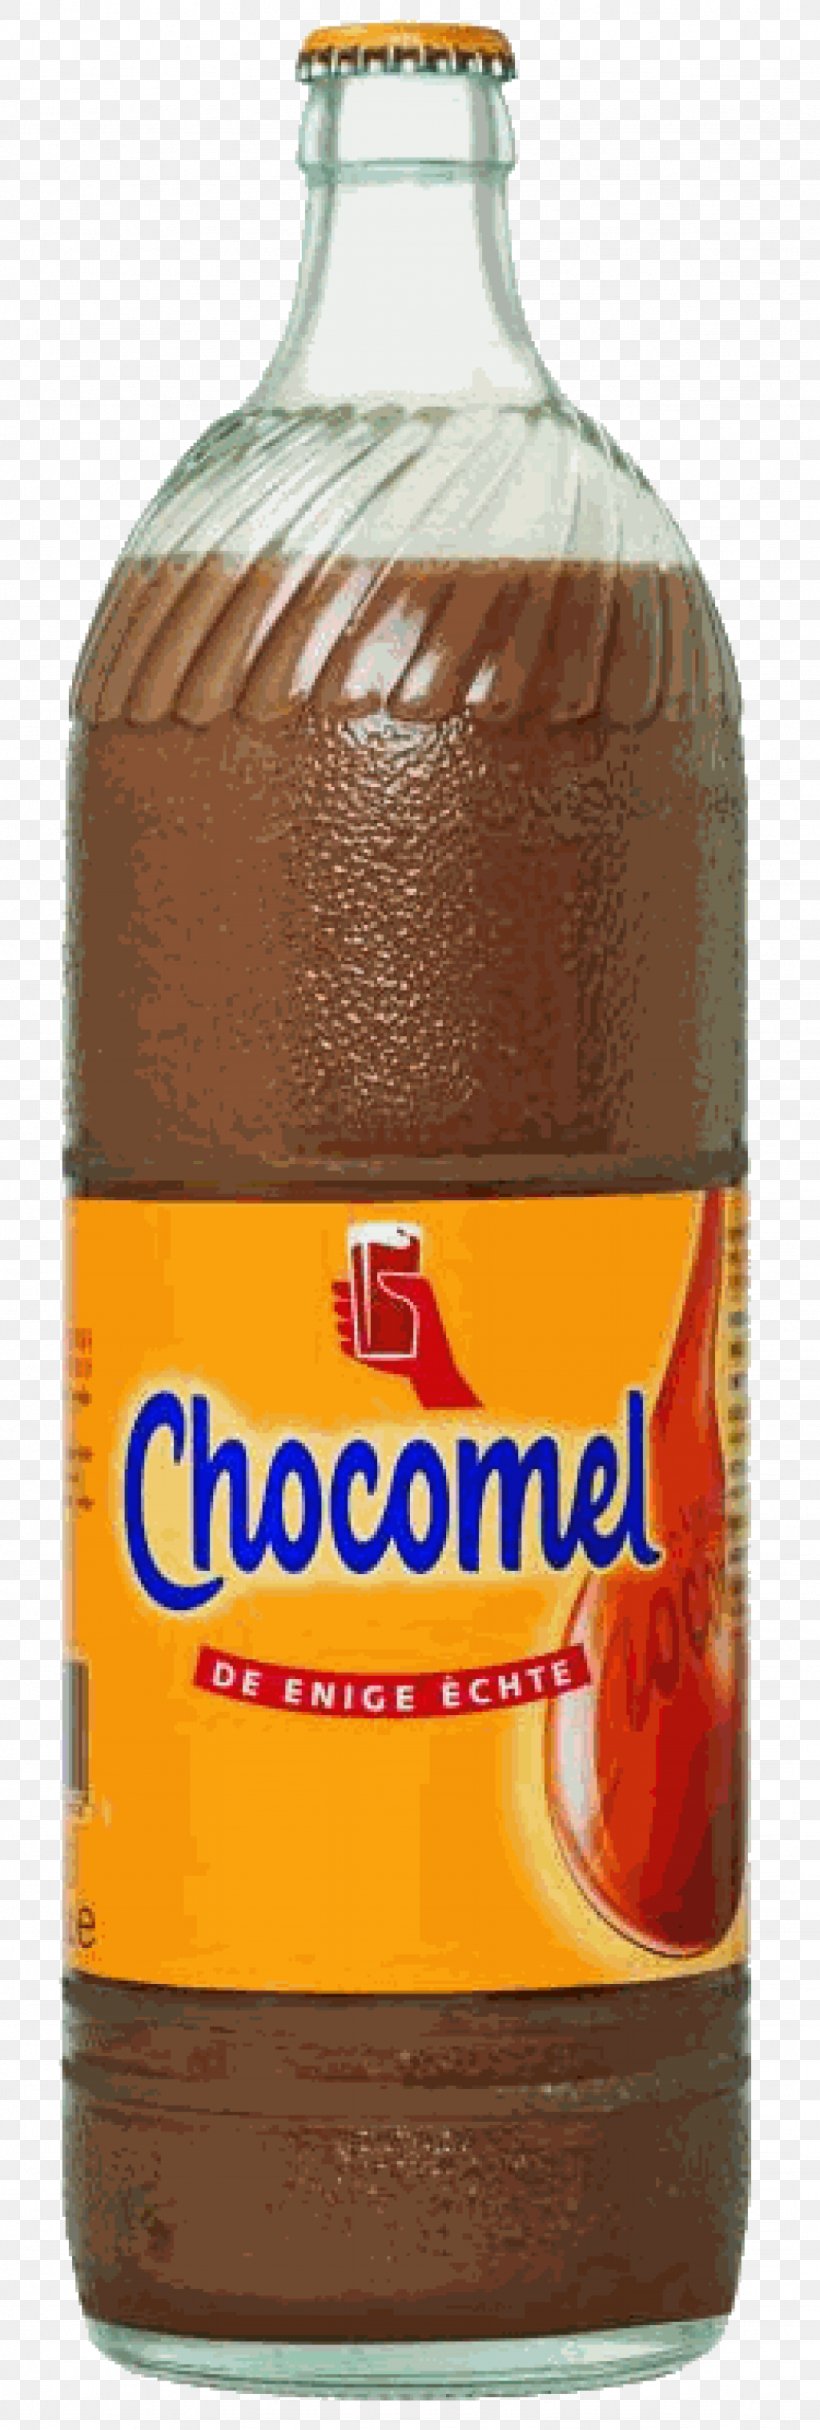 Chocolate Milk Chocomel Glass Bottle Liter, PNG, 1024x3035px, Chocolate Milk, Bottle, Chocomel, Distilled Beverage, Drink Download Free